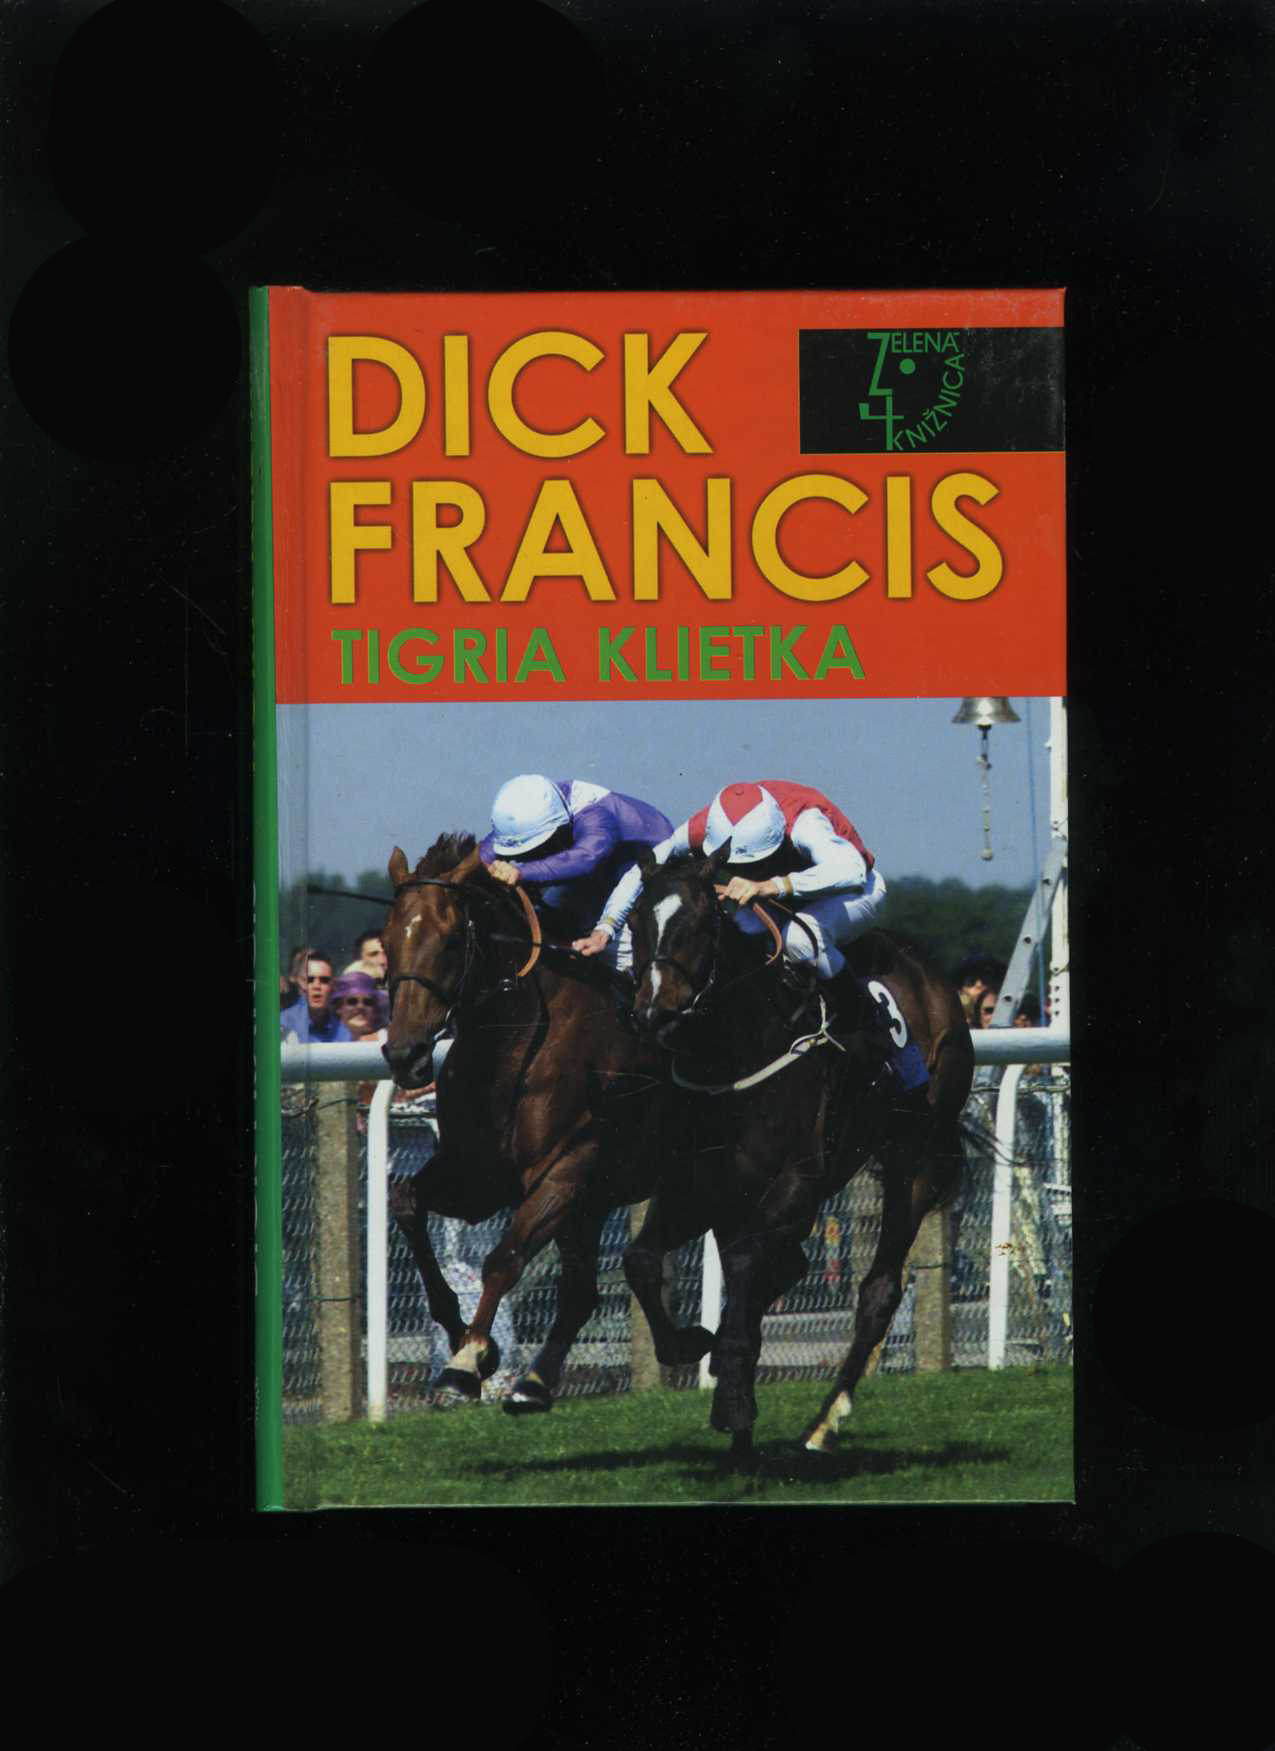 Tigria klietka (Dick Francis)